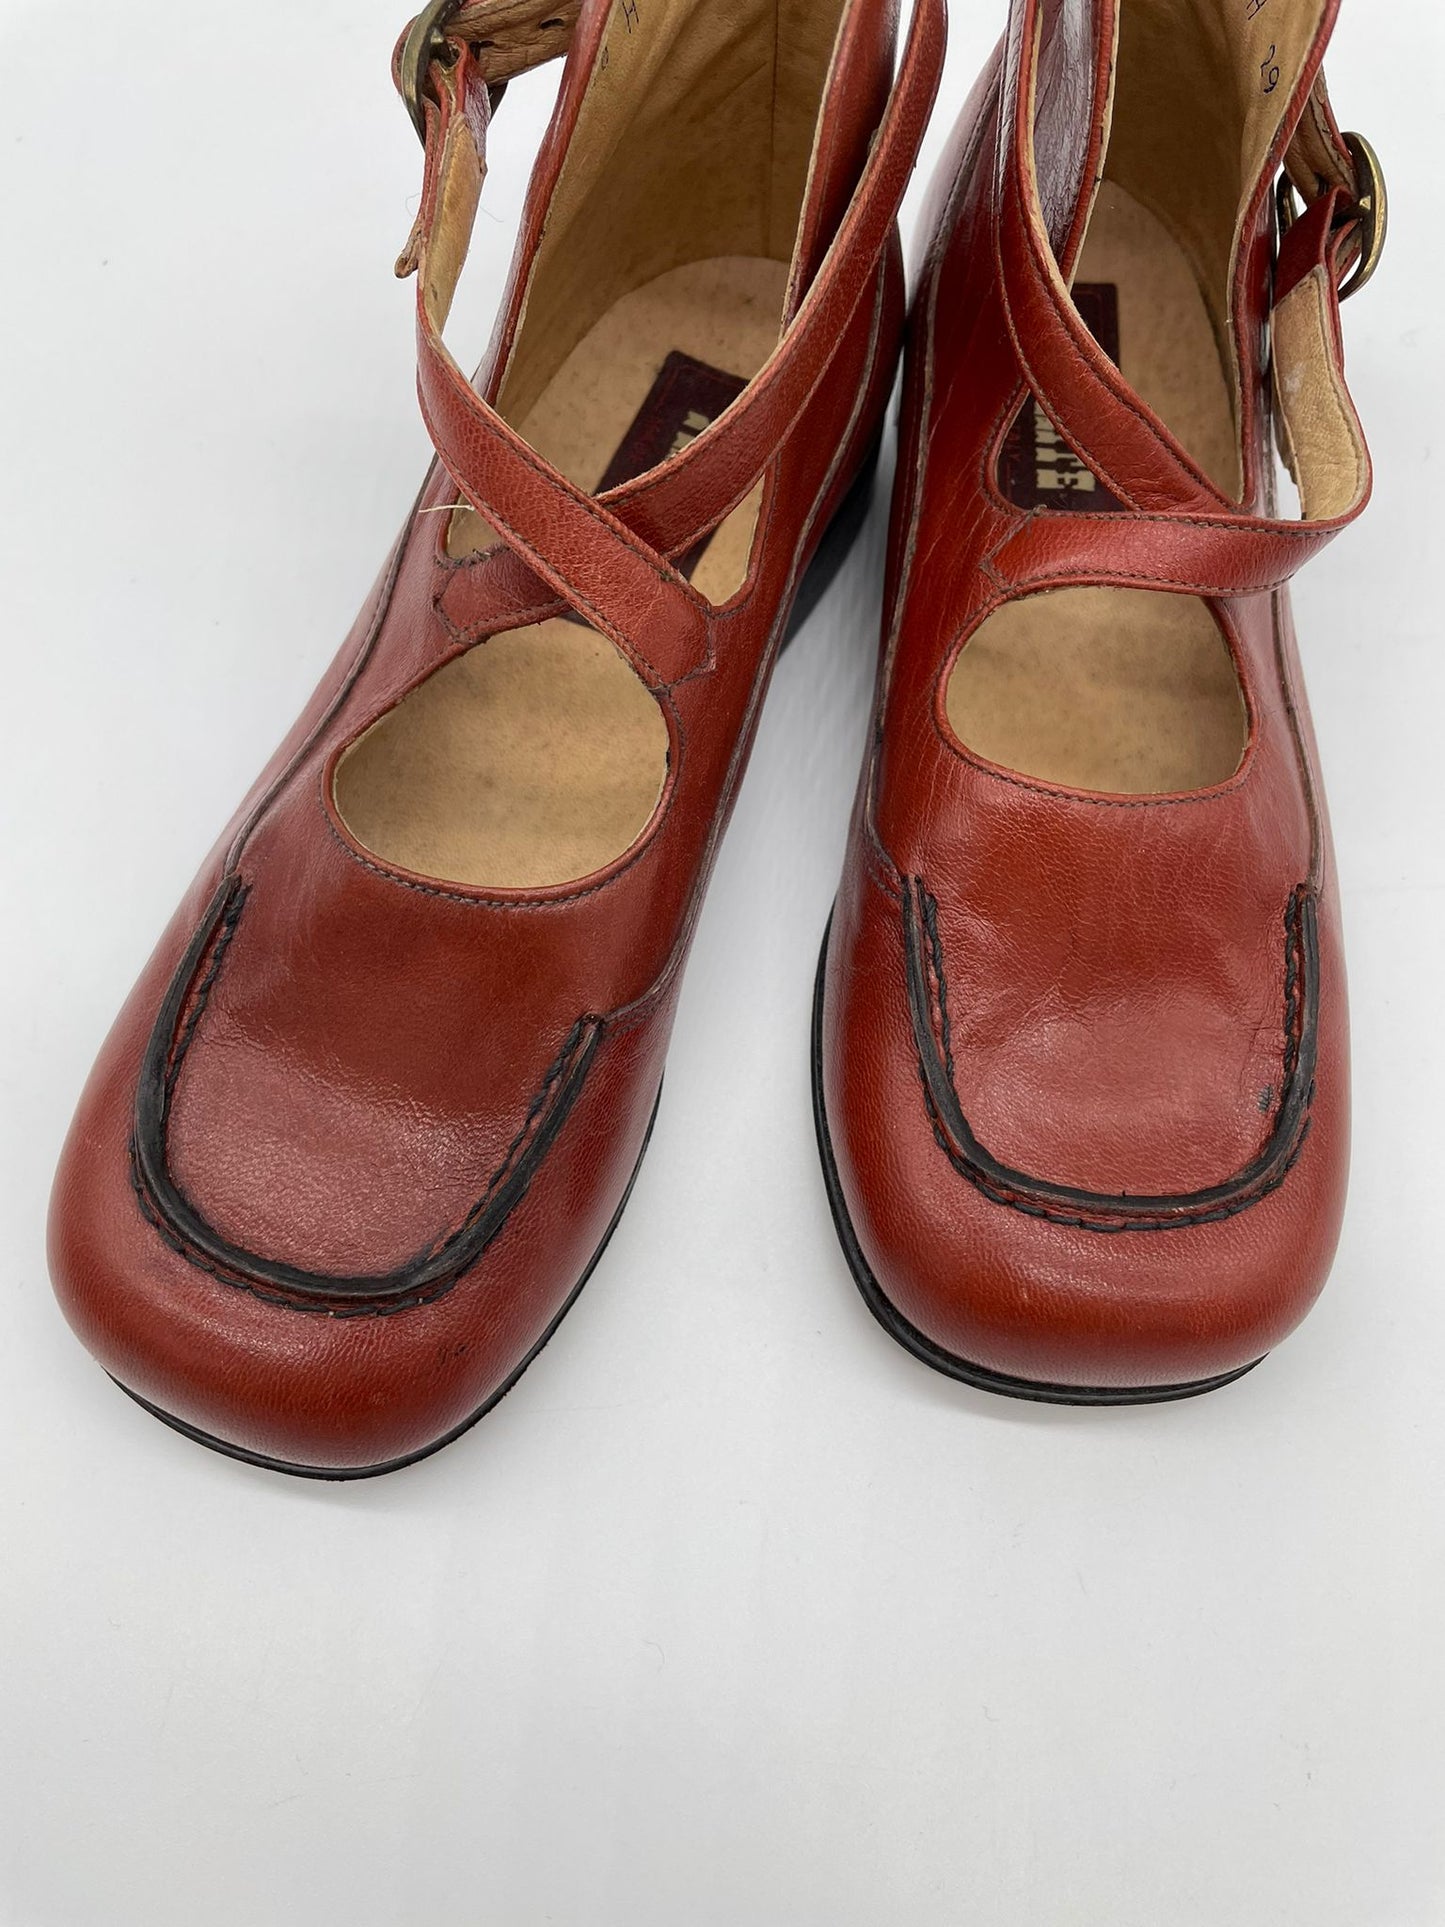 Trecate kids shoes 1960